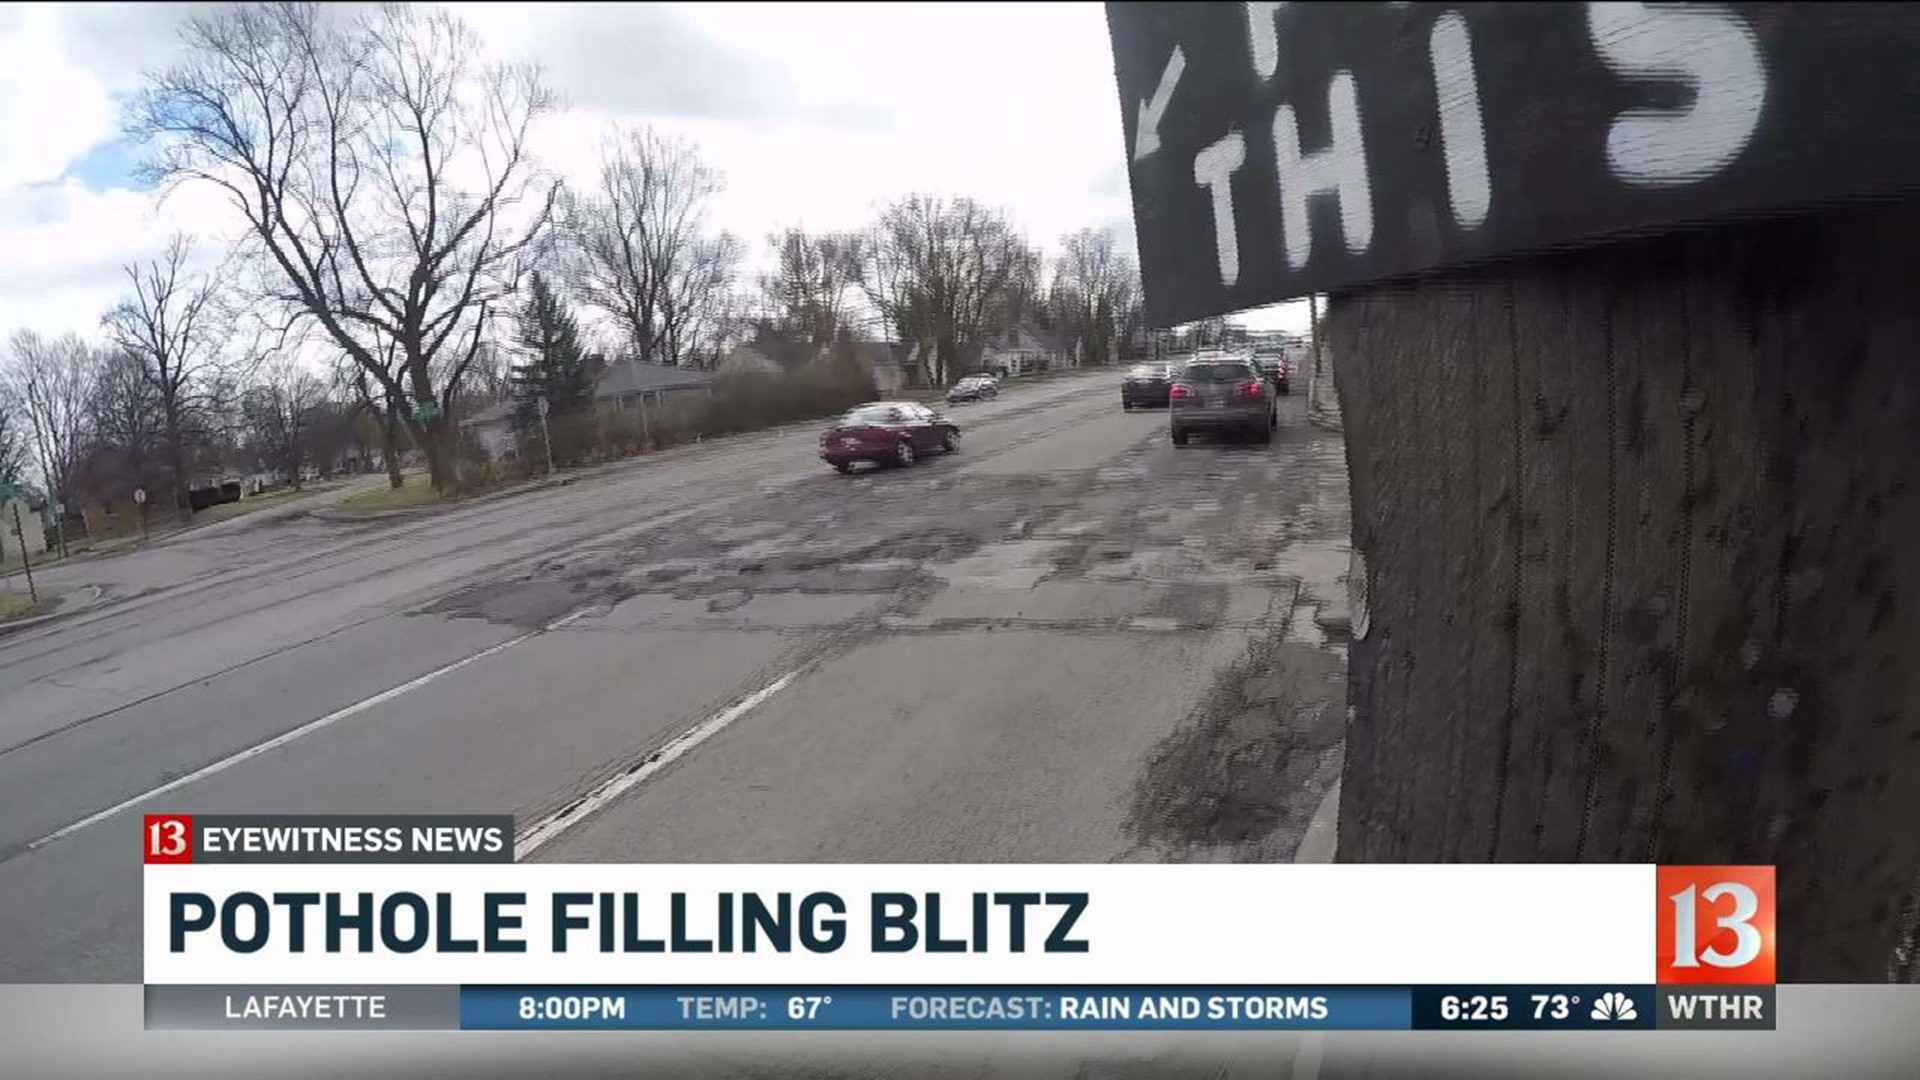 Pothole filling blitz